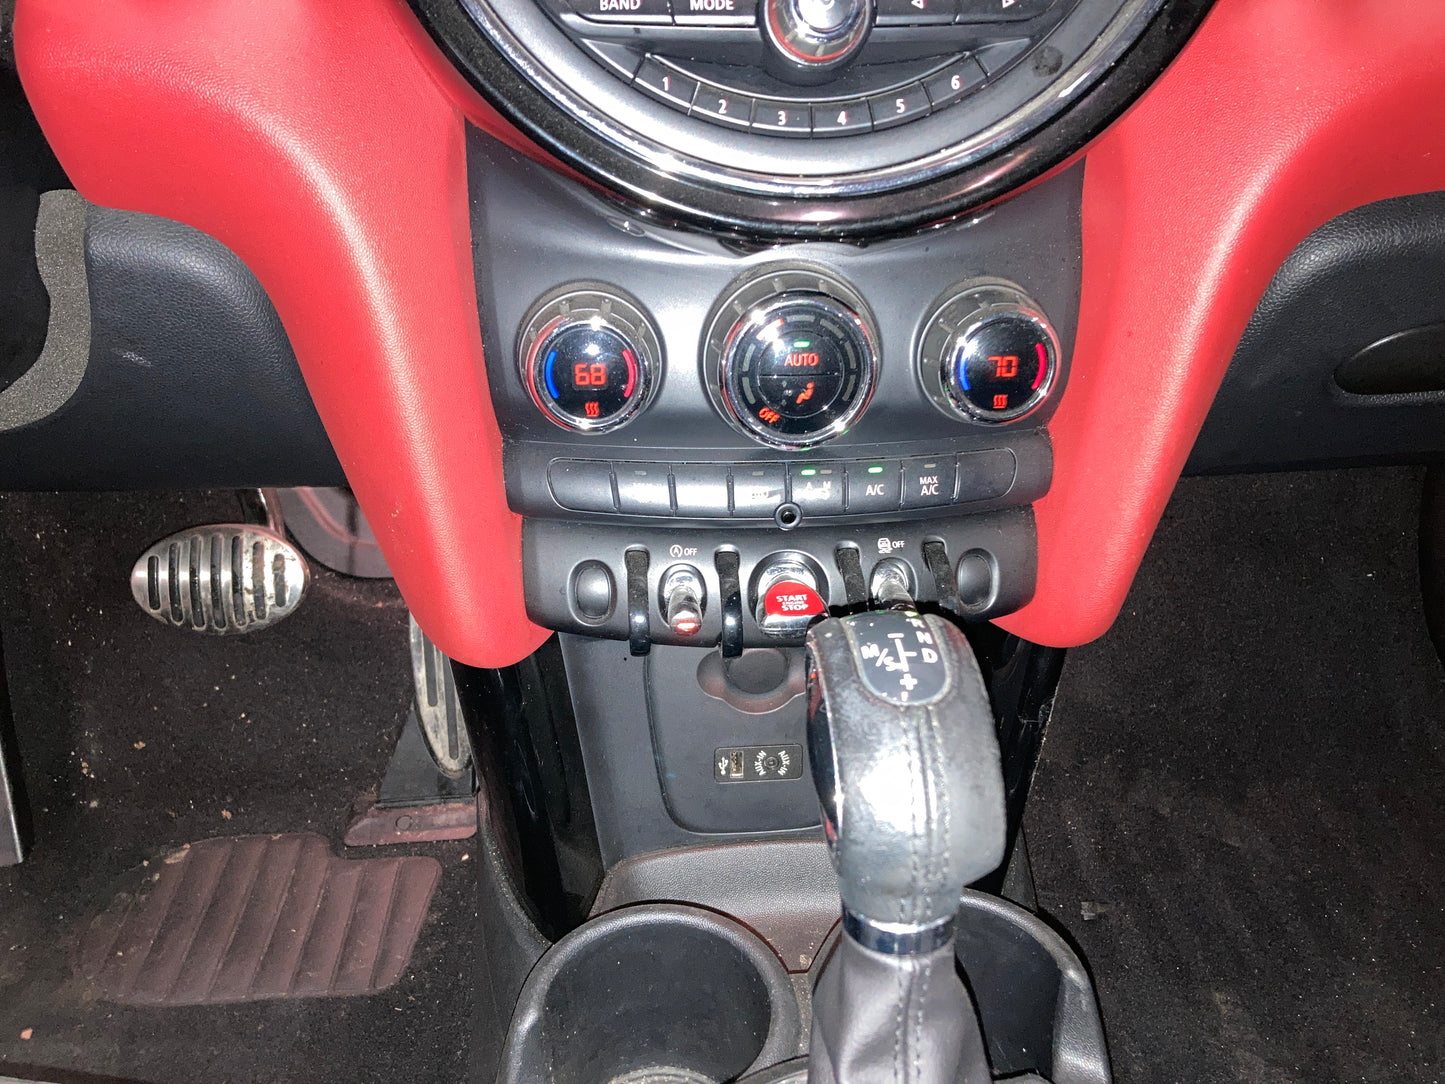 2015 MINI Cooper S, New Parts Car (February 2023) Stk #360